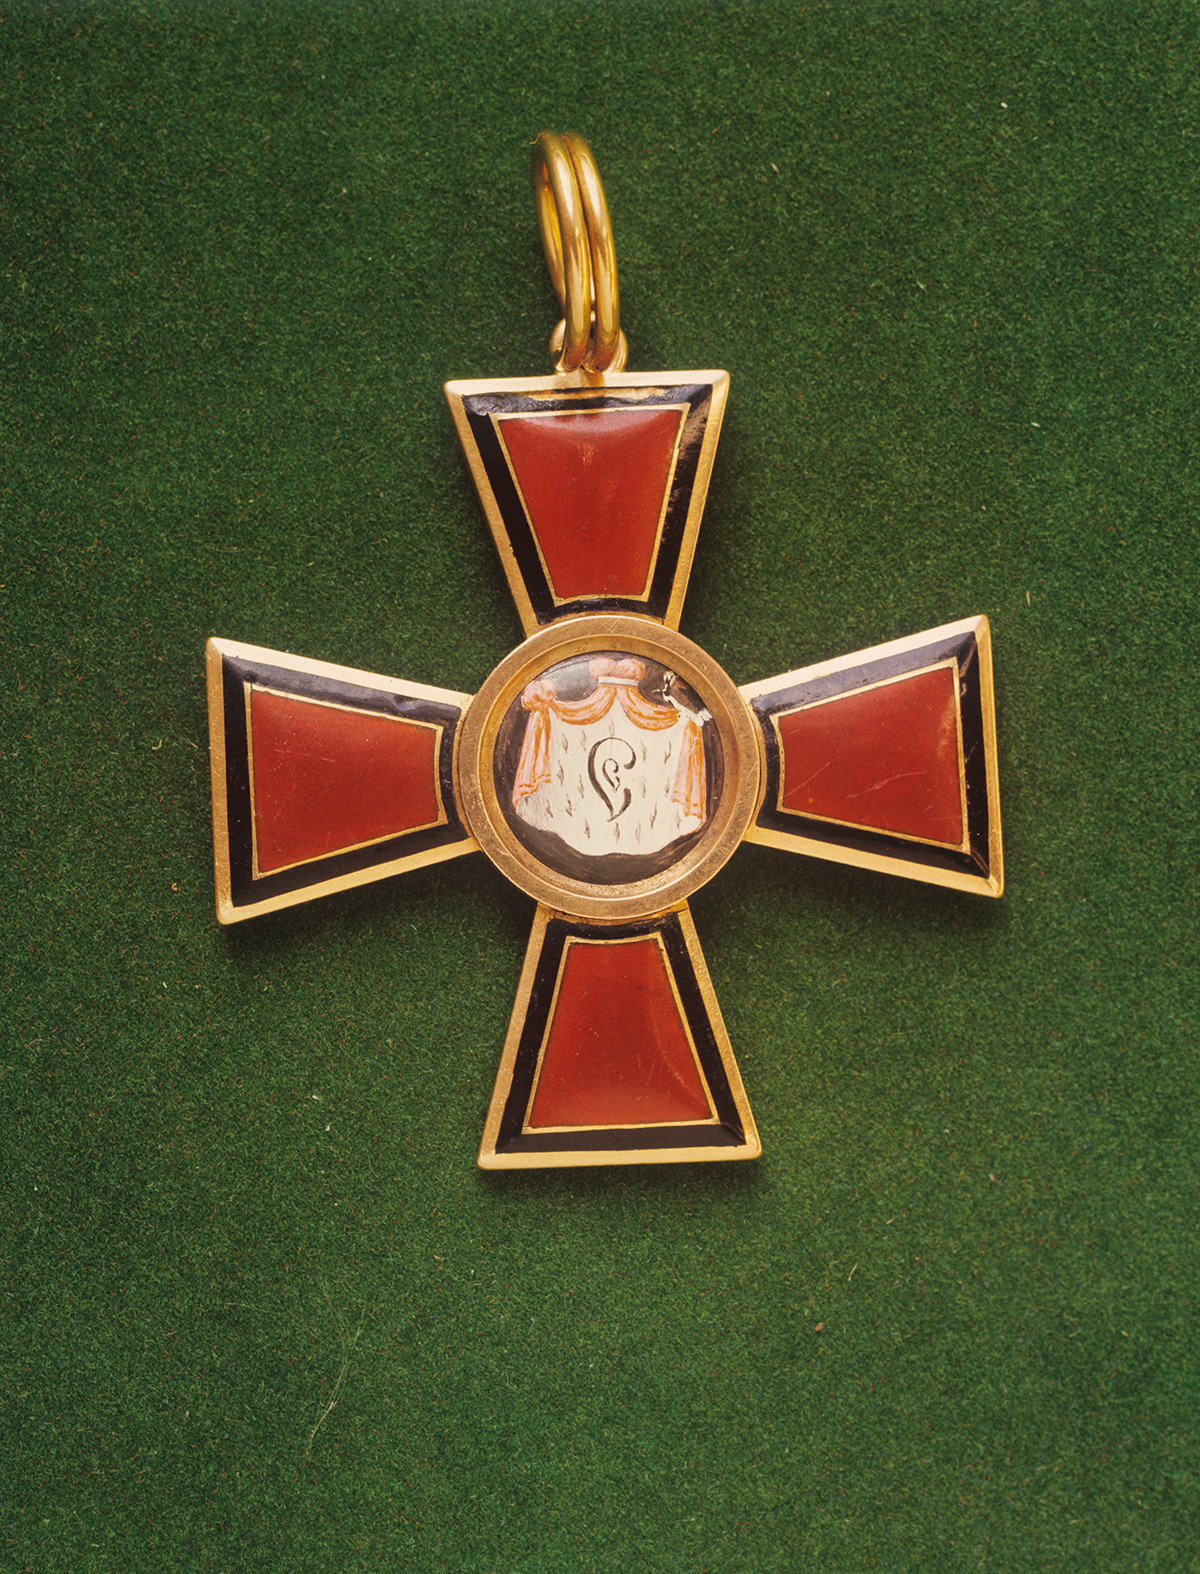 The Cross (Badge) of the Order of Saint Vladimir, 1st class.

